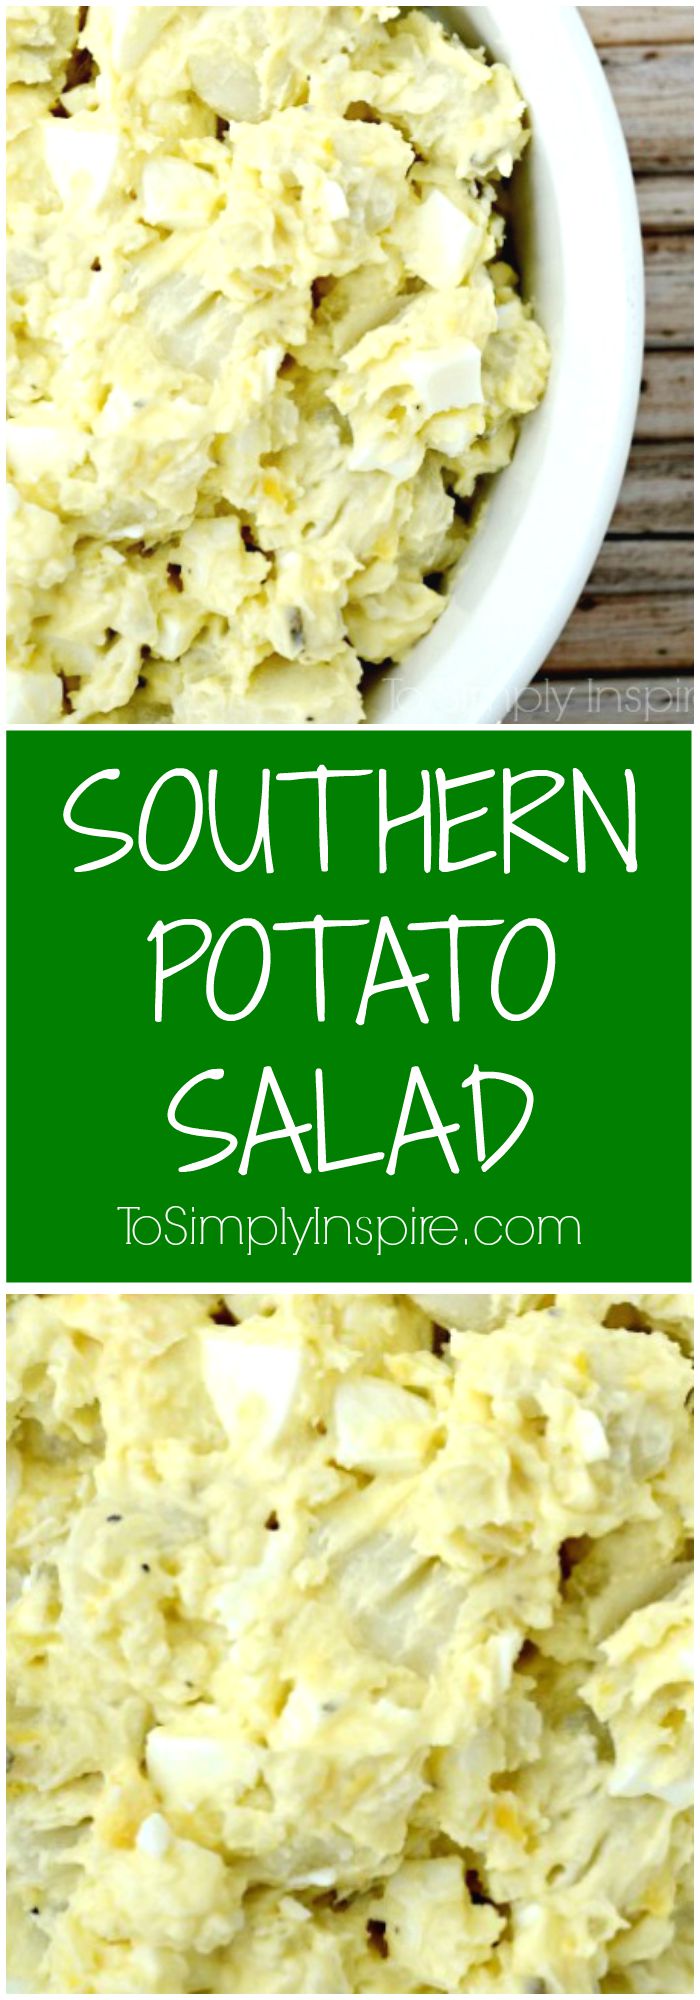 Southern Potato Salad Recipe - The Best Classic, Creamy Version